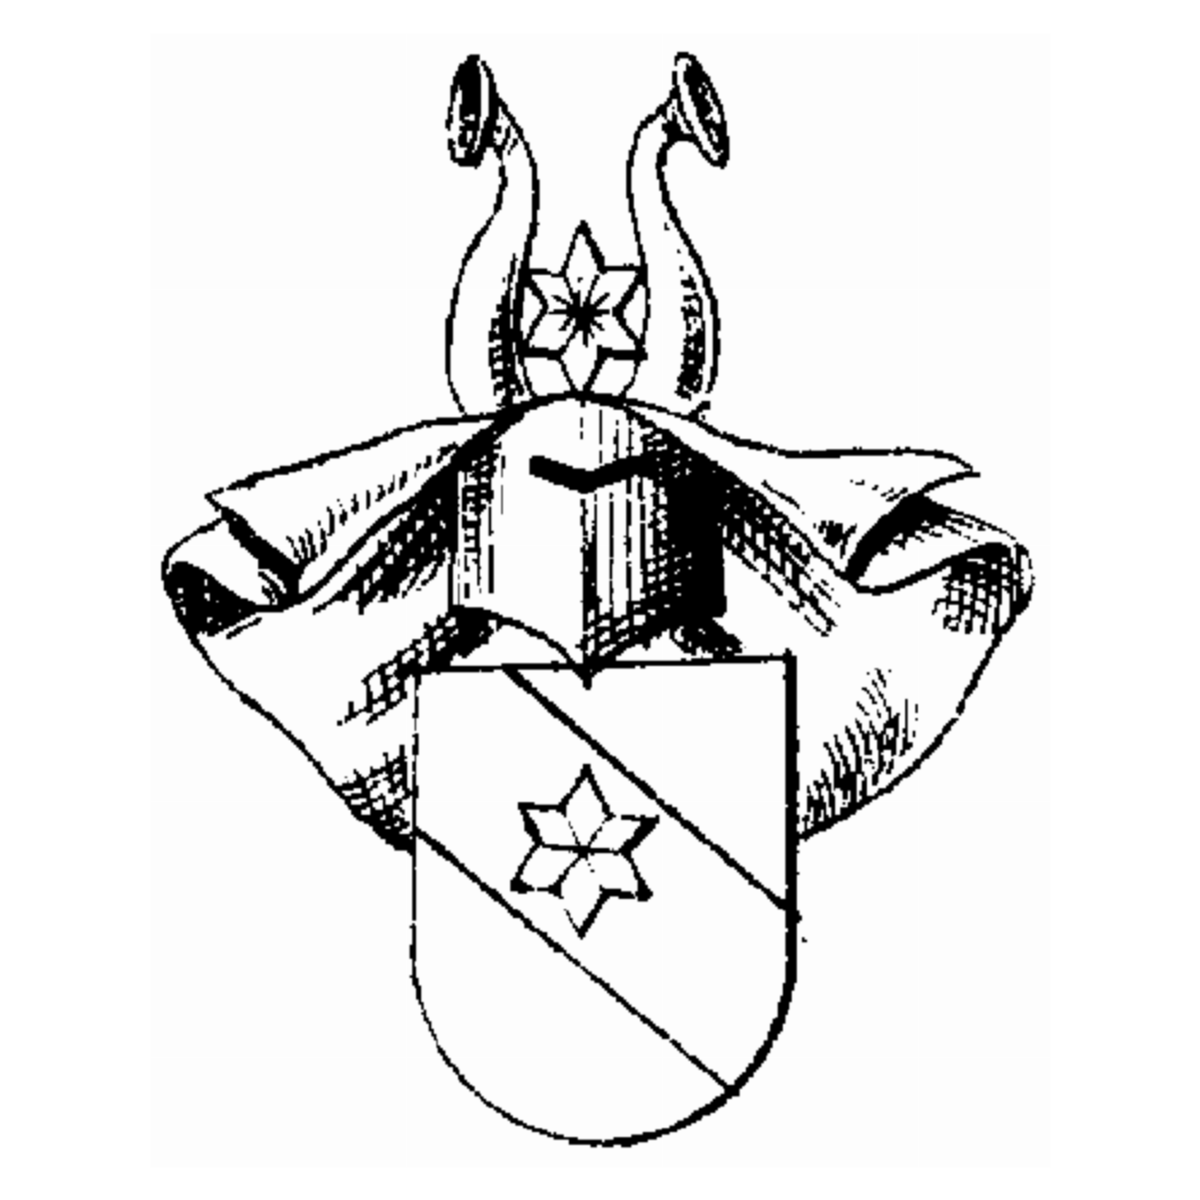 Wappen der Familie Lechner